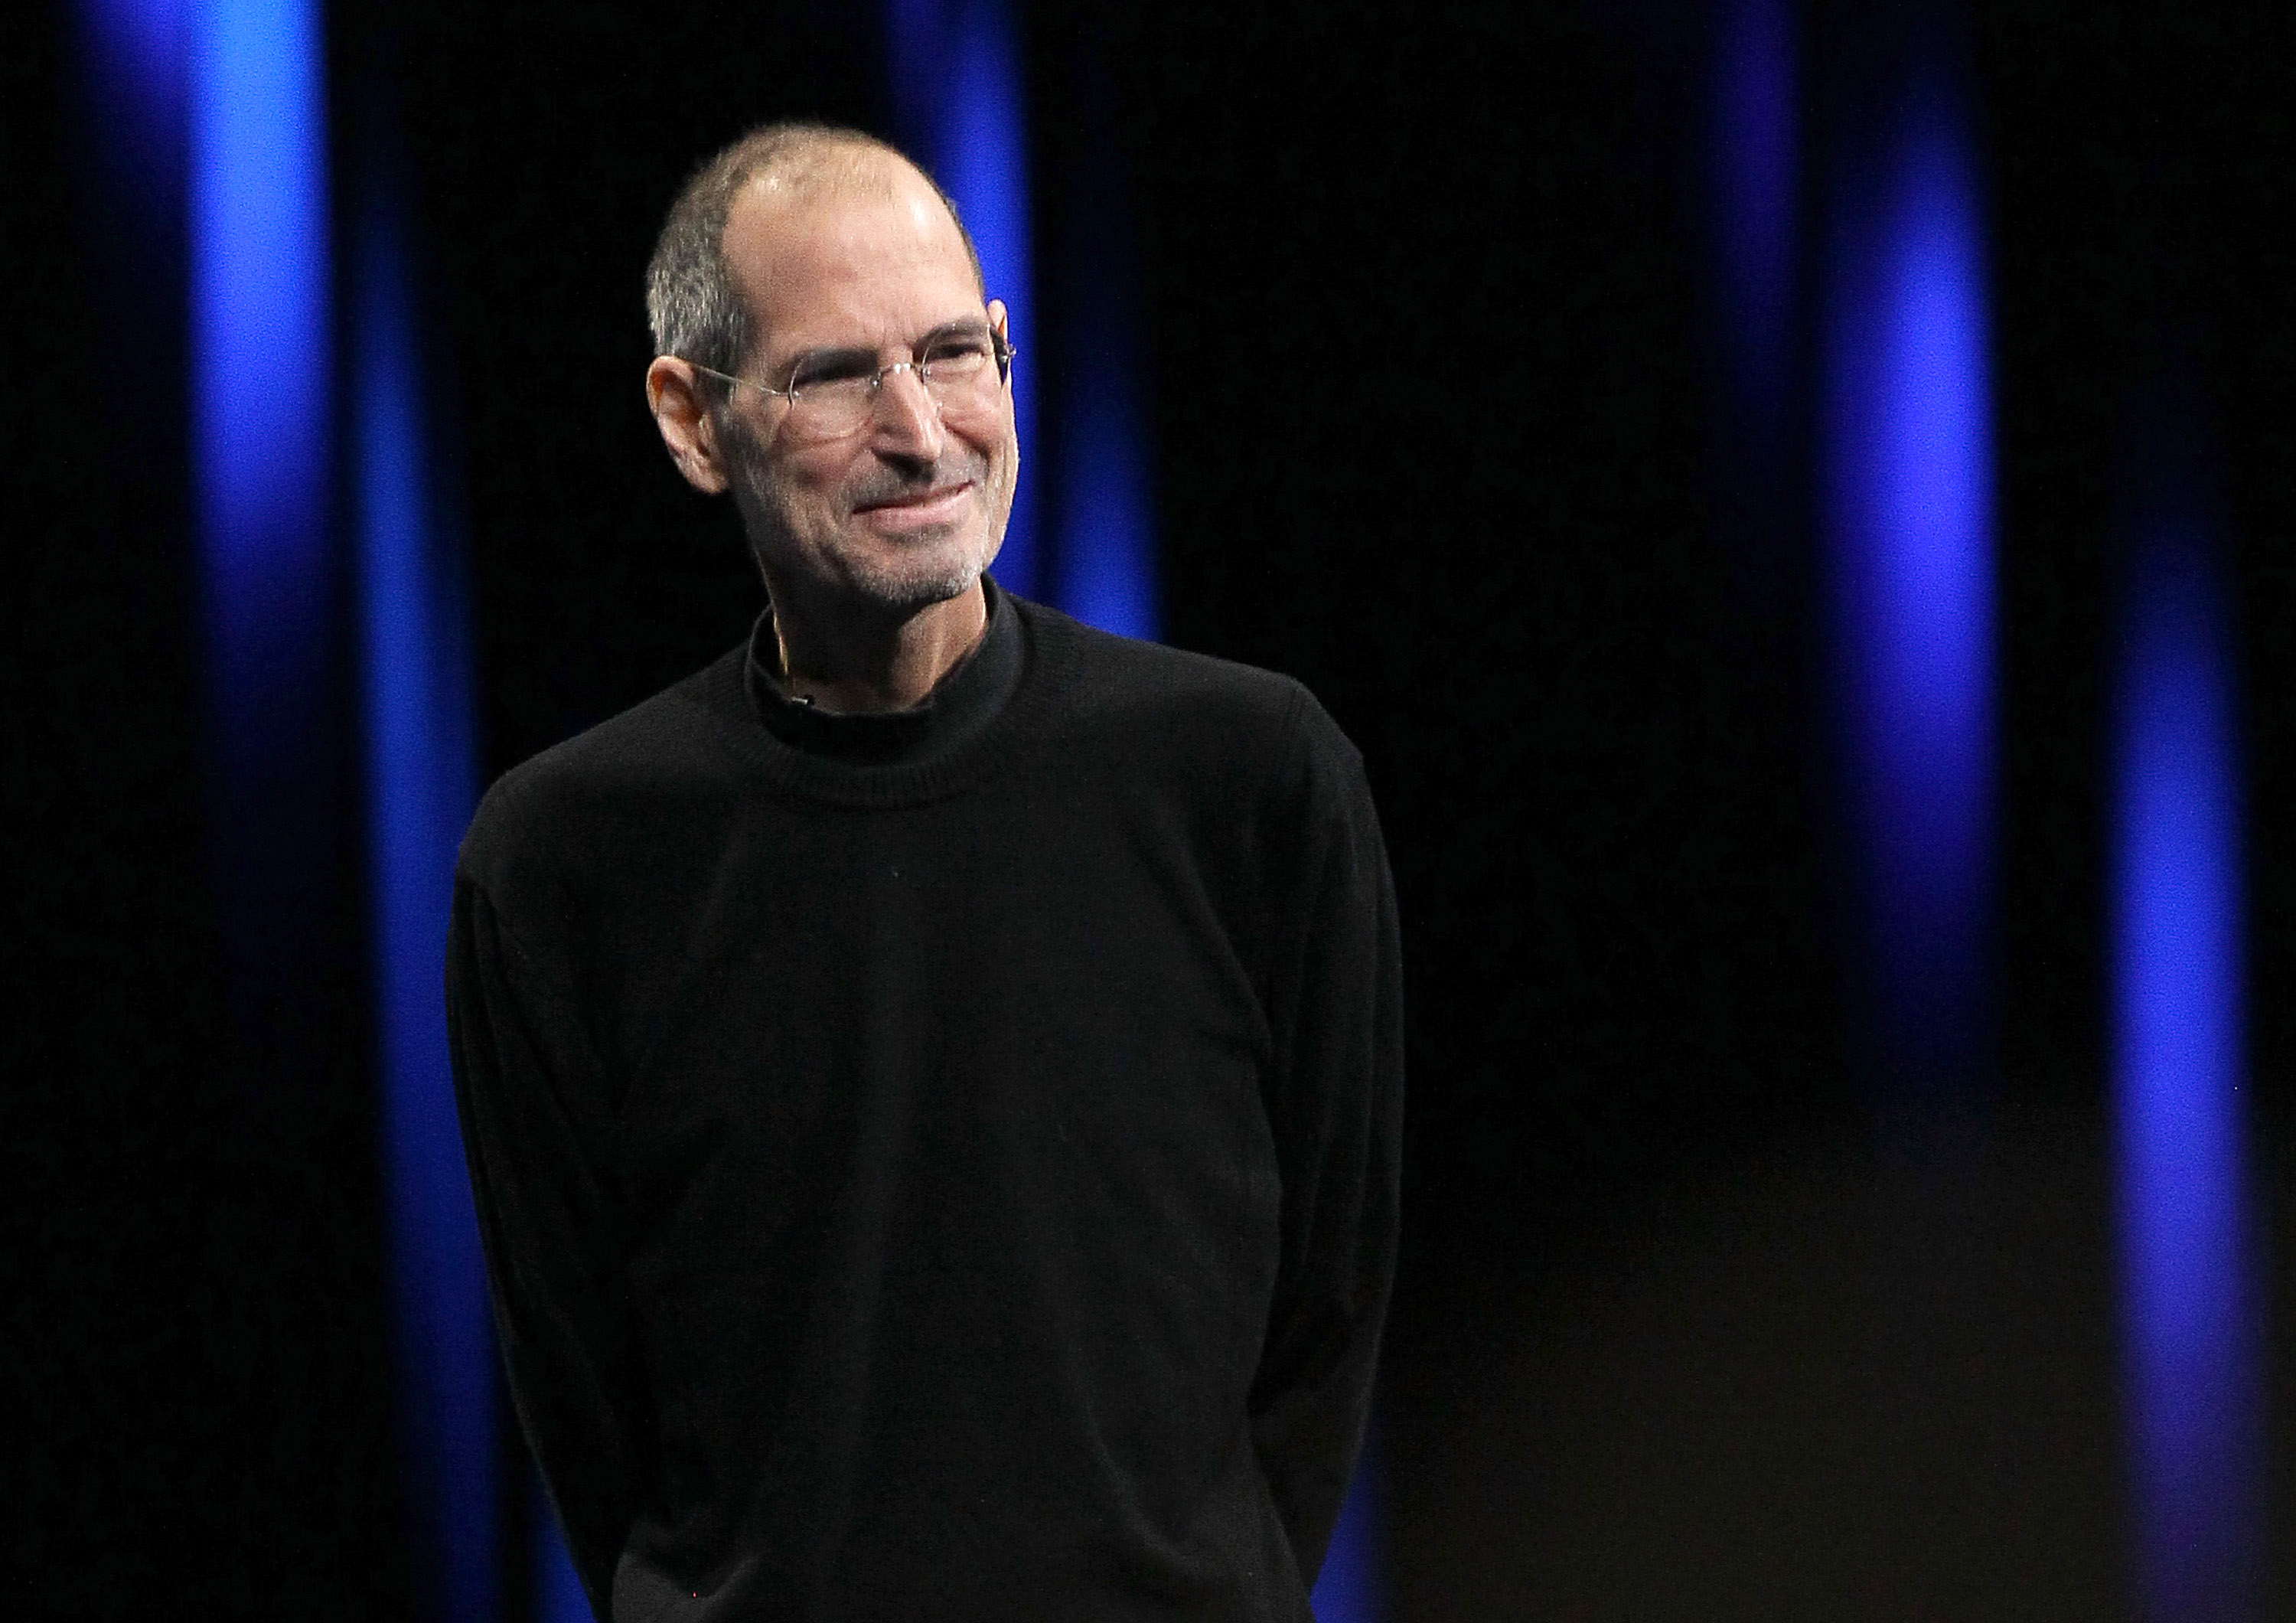 Steve Jobs at emaze Presentation